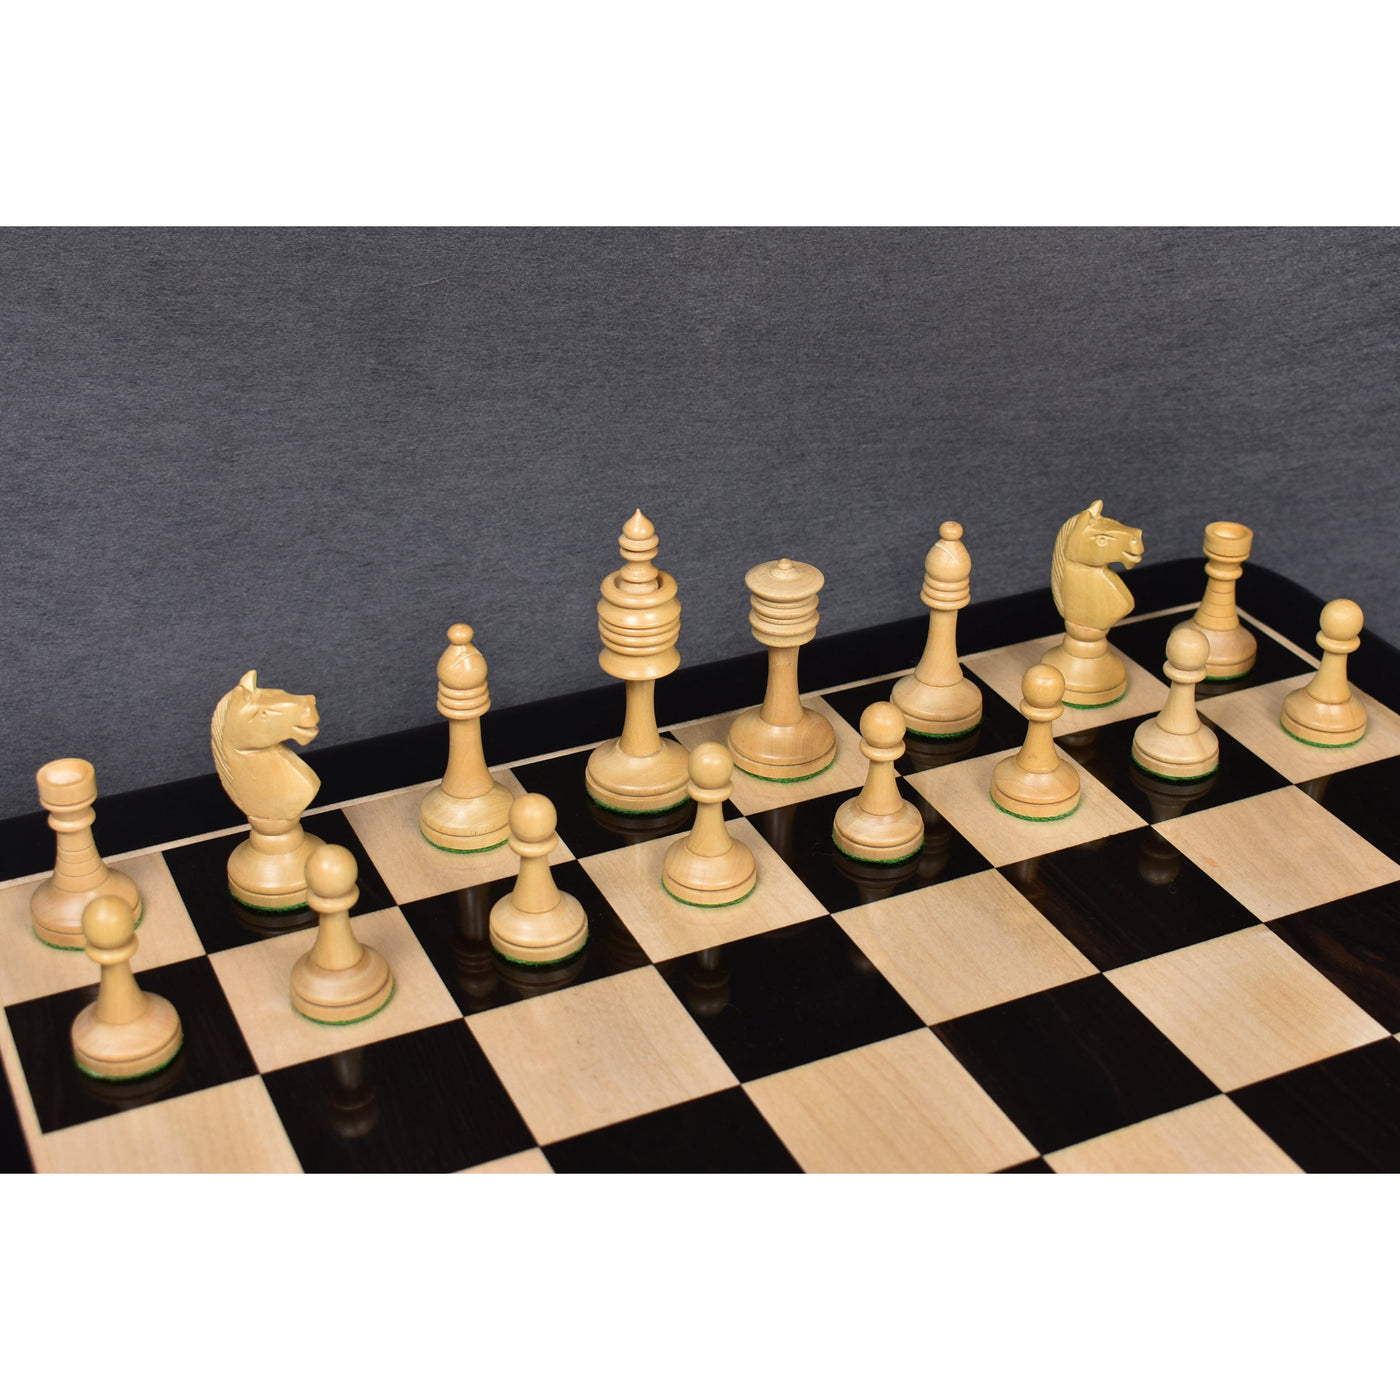 Old English Pre Staunton Chess Pieces Only Set